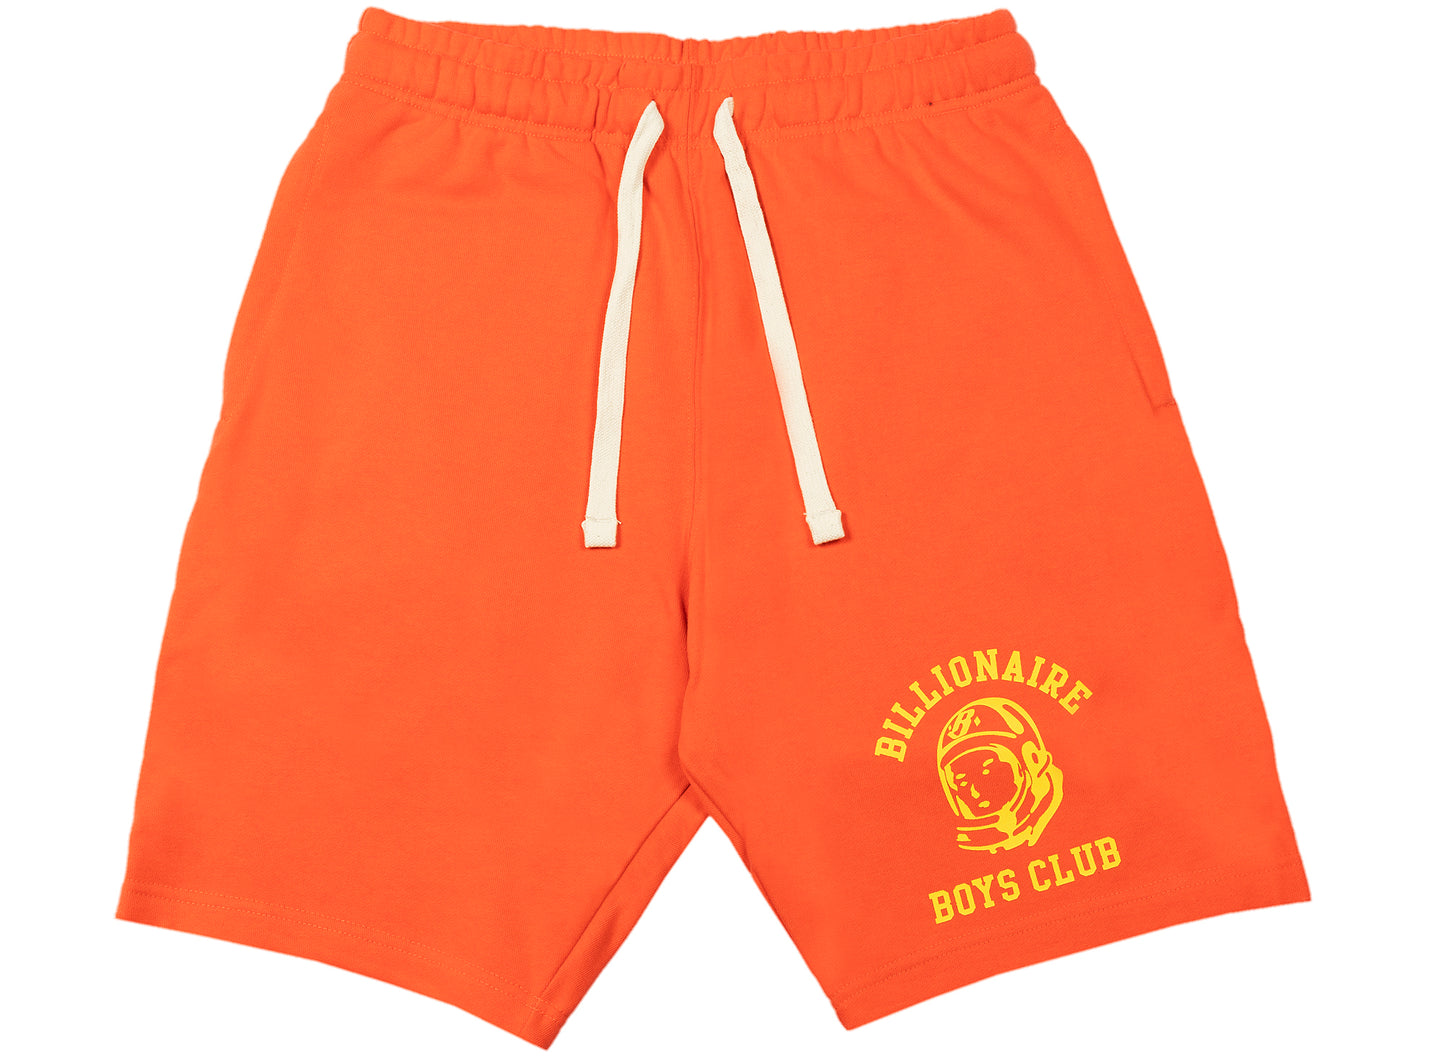 BBC Club Shorts in Orange